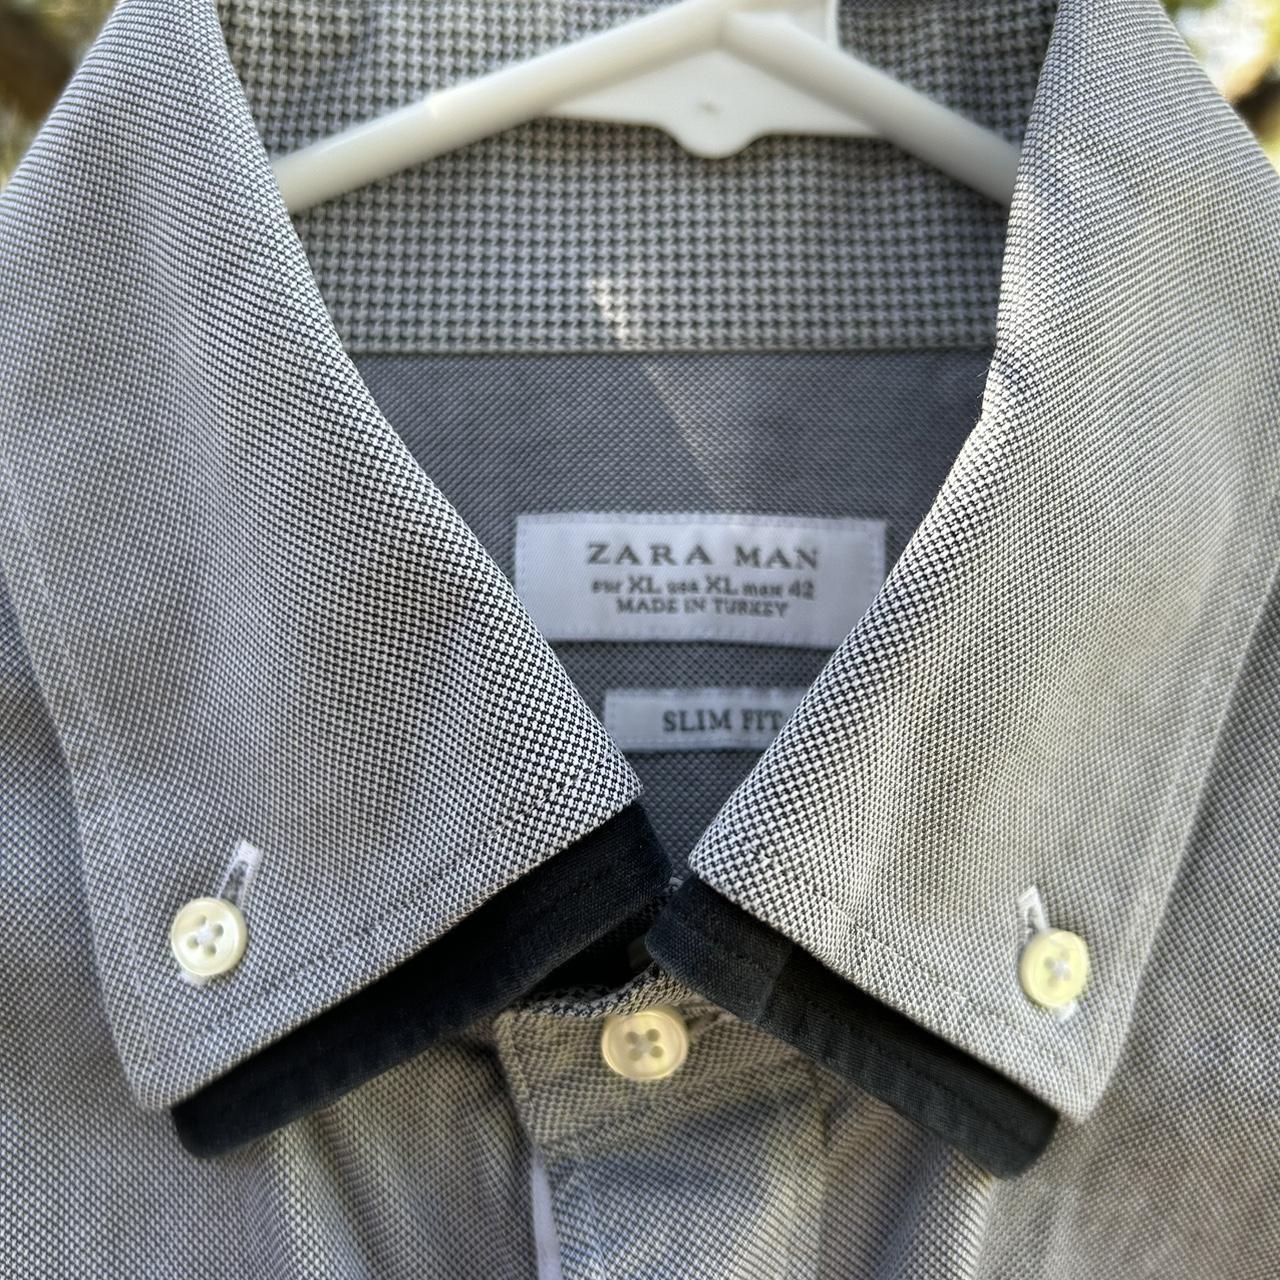 Zara Man Dress Pattern Shirt Size Medium. Slim Fit. Made In Turkey